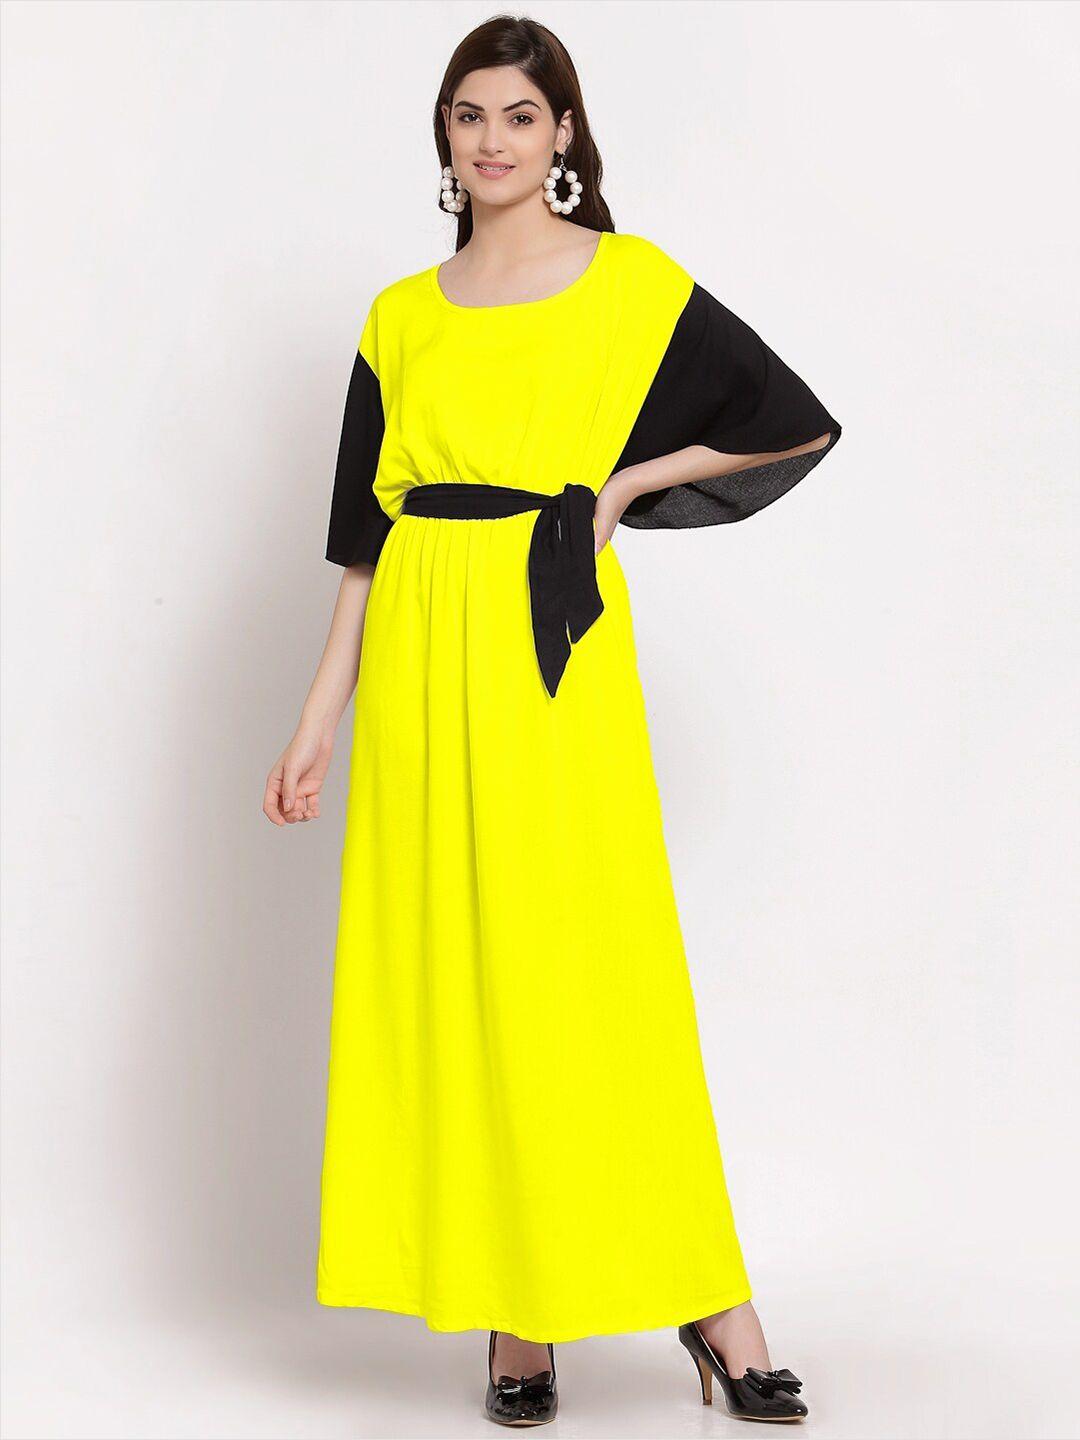 patrorna women solid cotton blend a-line maxi dress